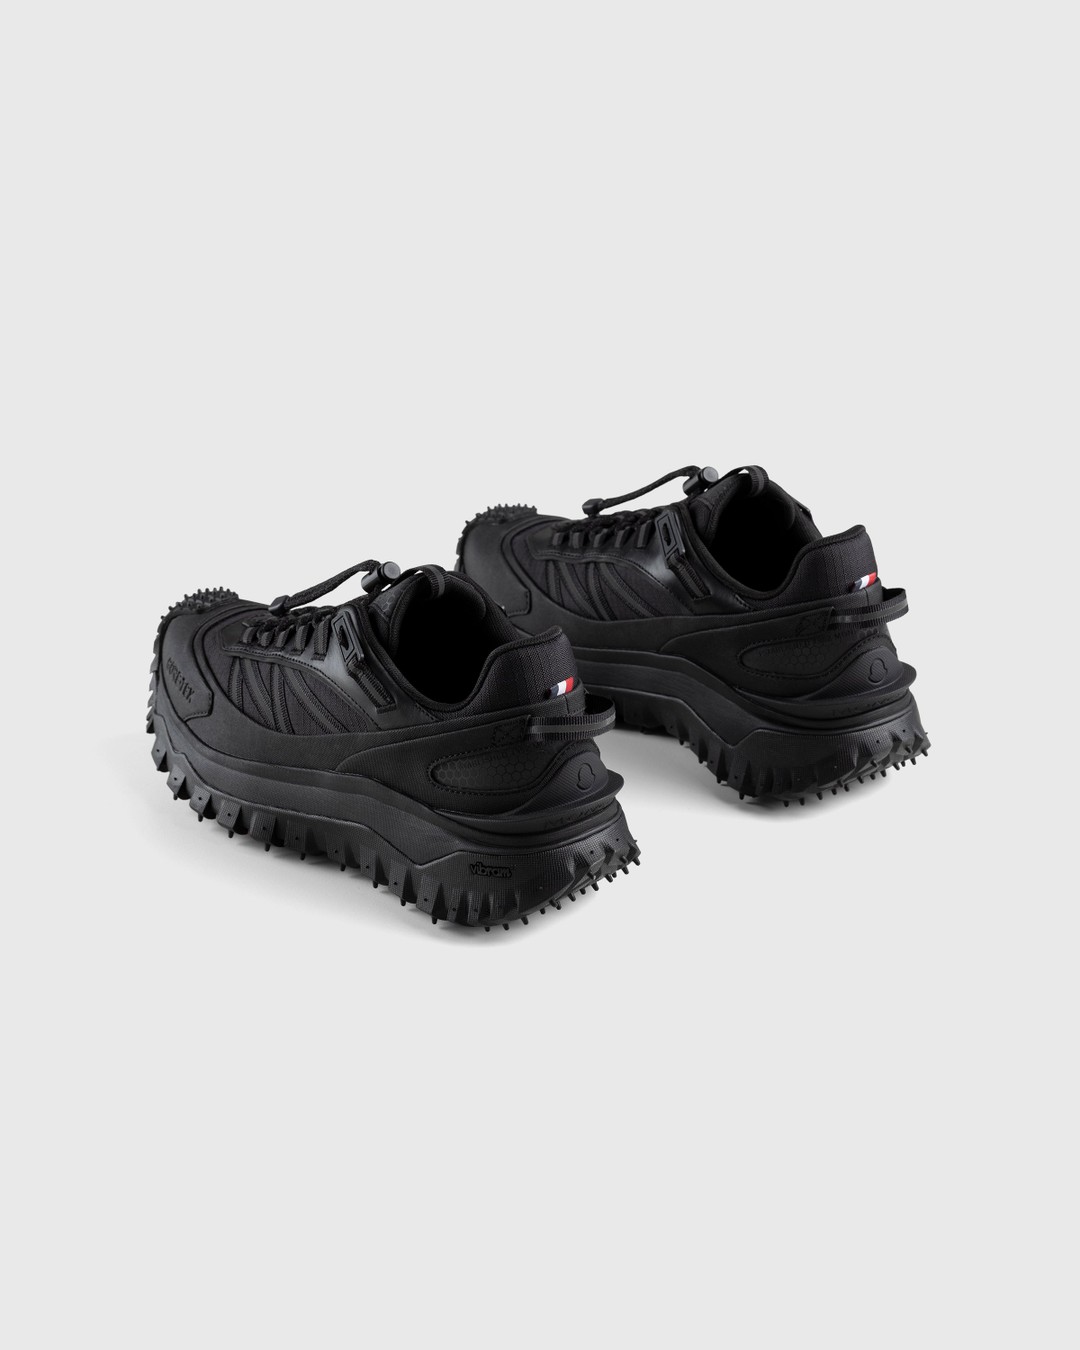 Moncler – Trailgrip GTX Sneakers Black - Low Top Sneakers - Black - Image 4